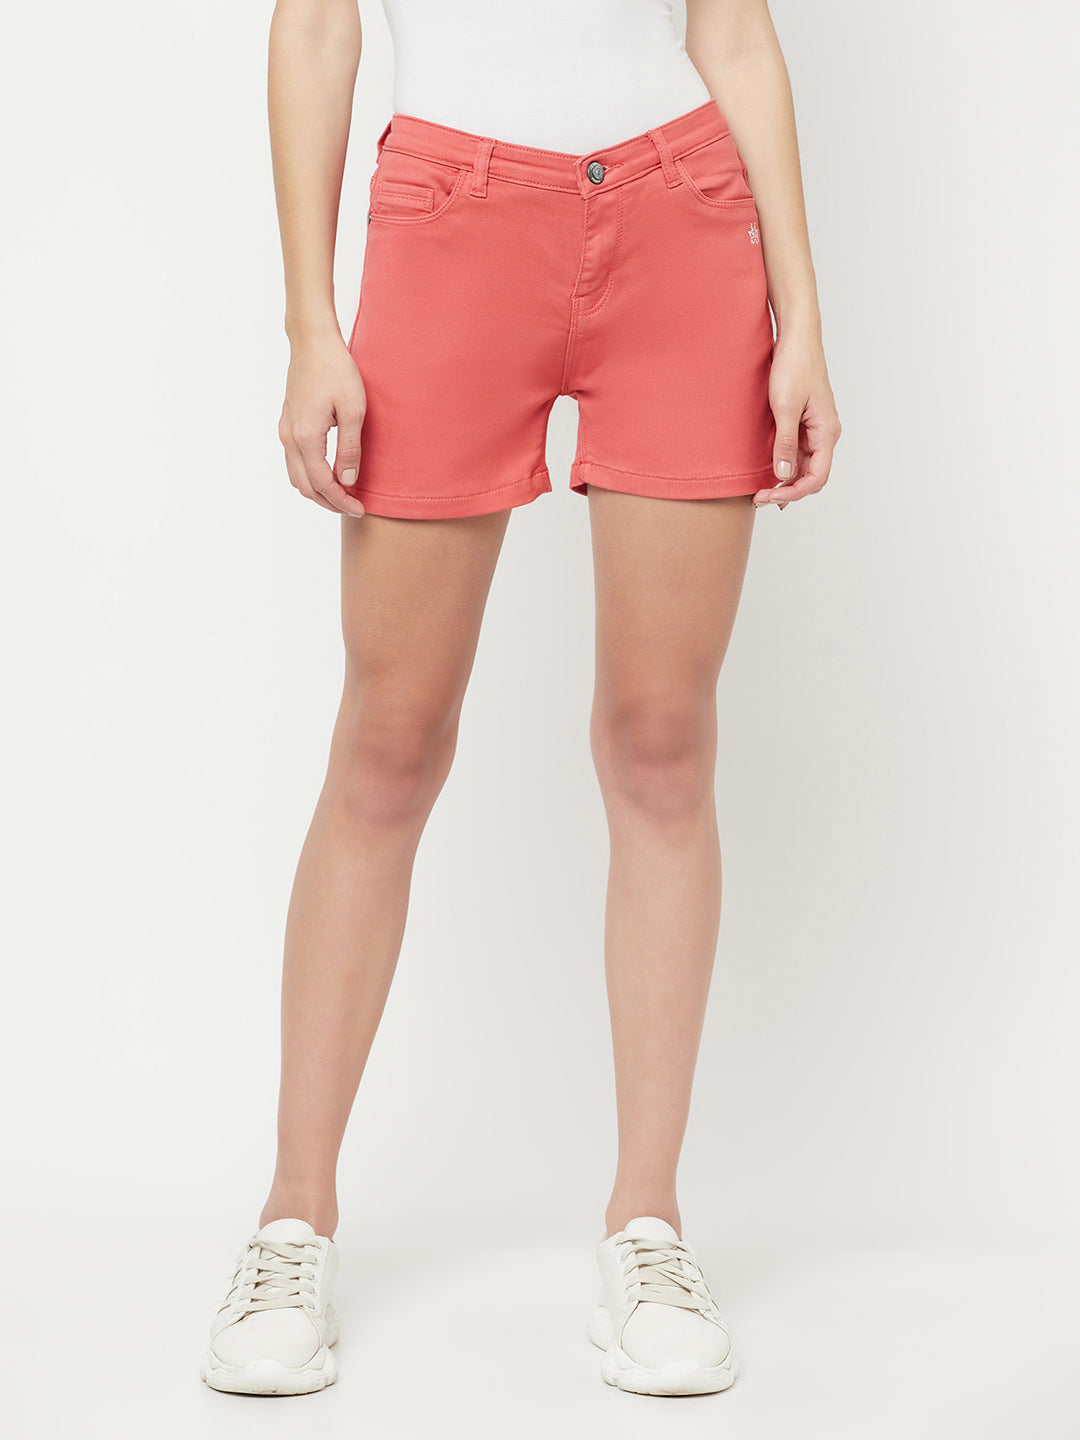 Pink shorts - Women Shorts